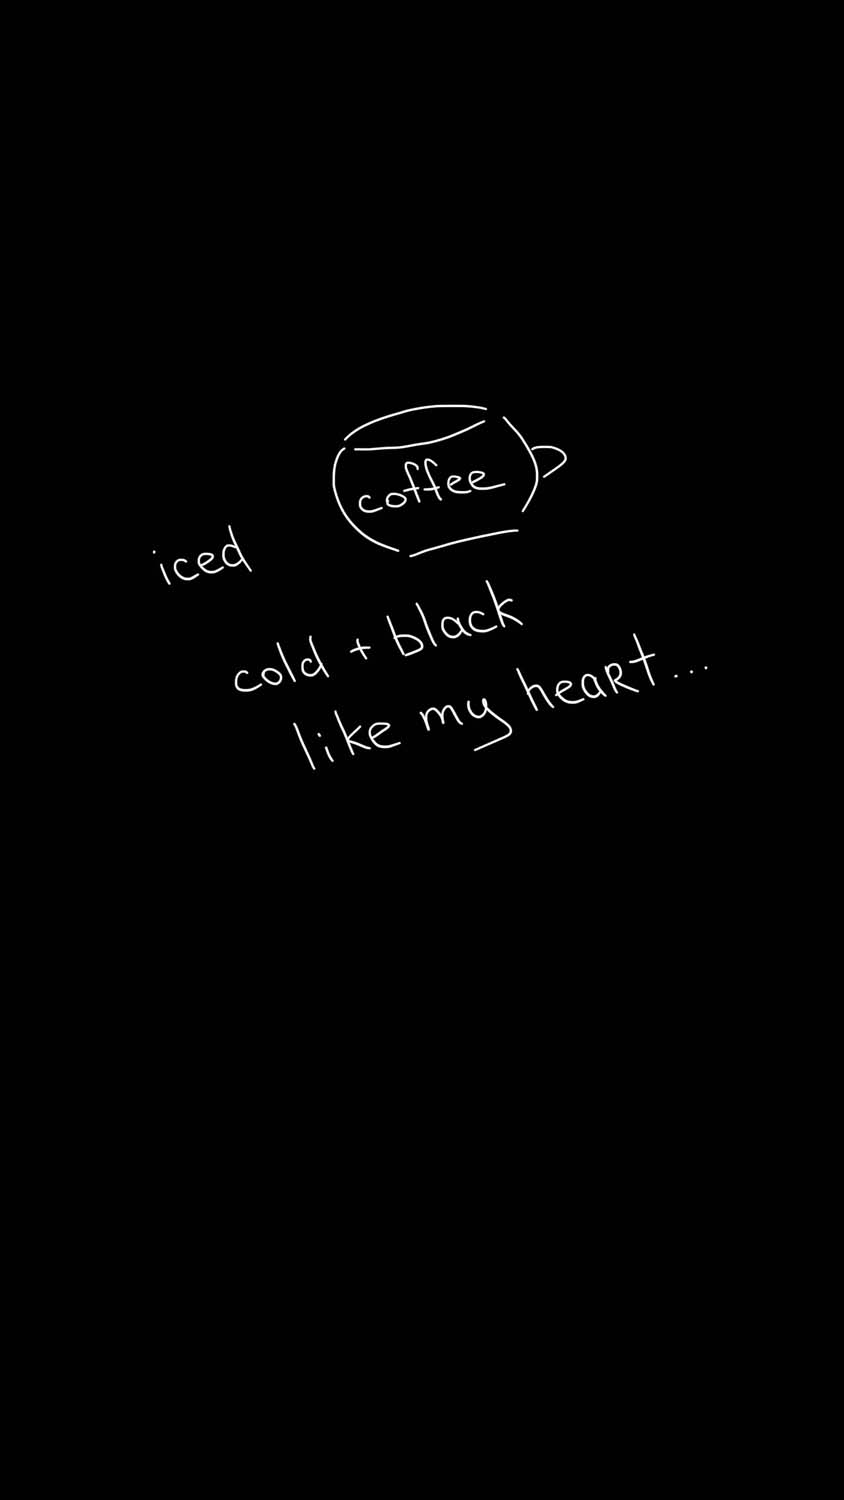 Cold Black Coffee Like My Heart